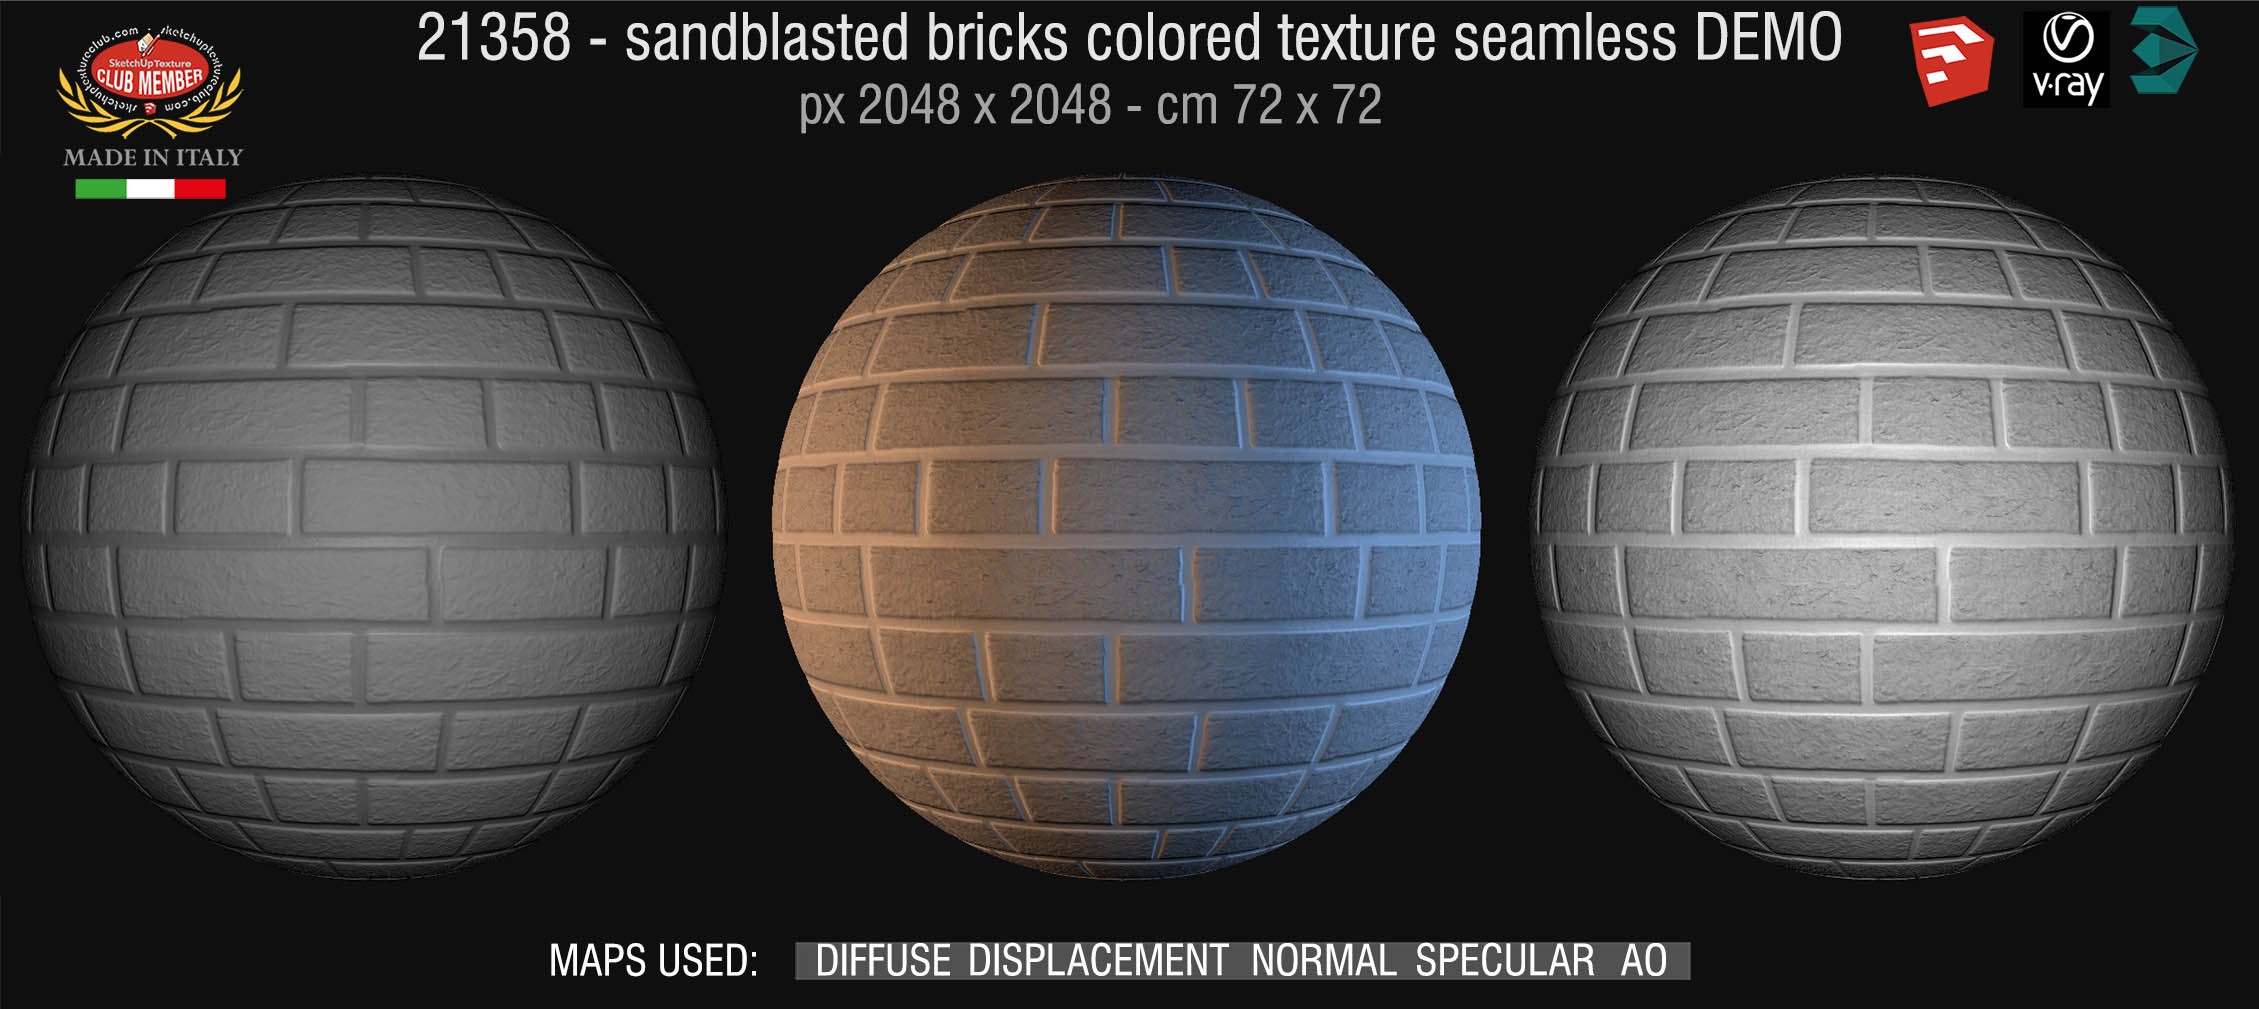 21358 sandblasted bricks colored texture seamless + maps DEMO